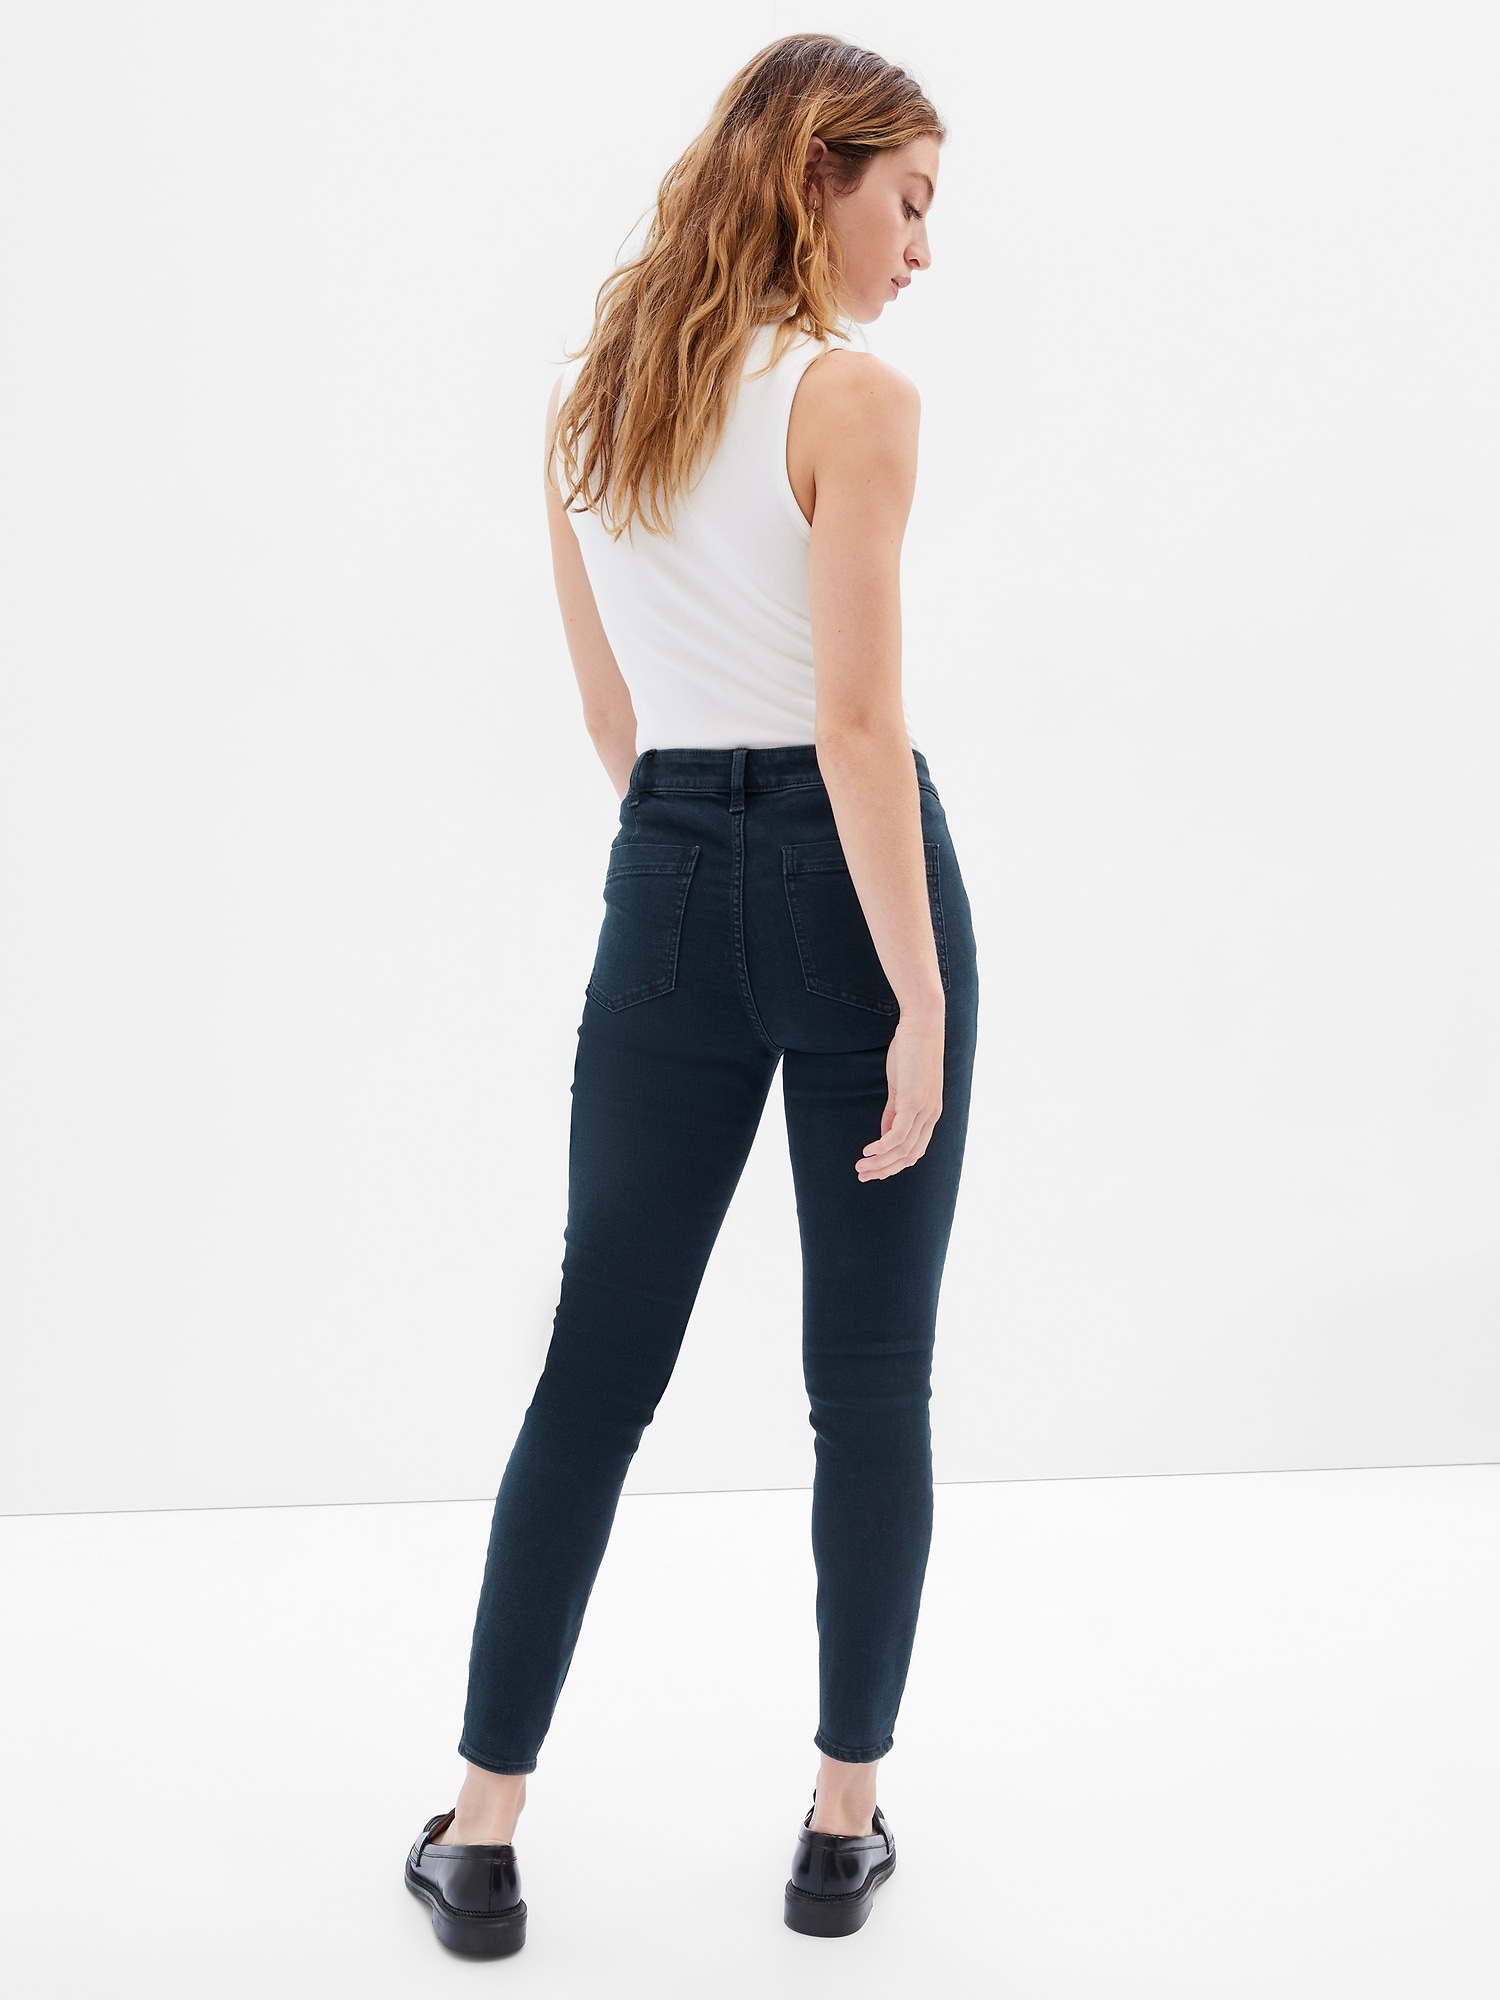 Gap Jeans Stretch High Rise Universal Leggings Ripped Blue Women's Sz 18/34